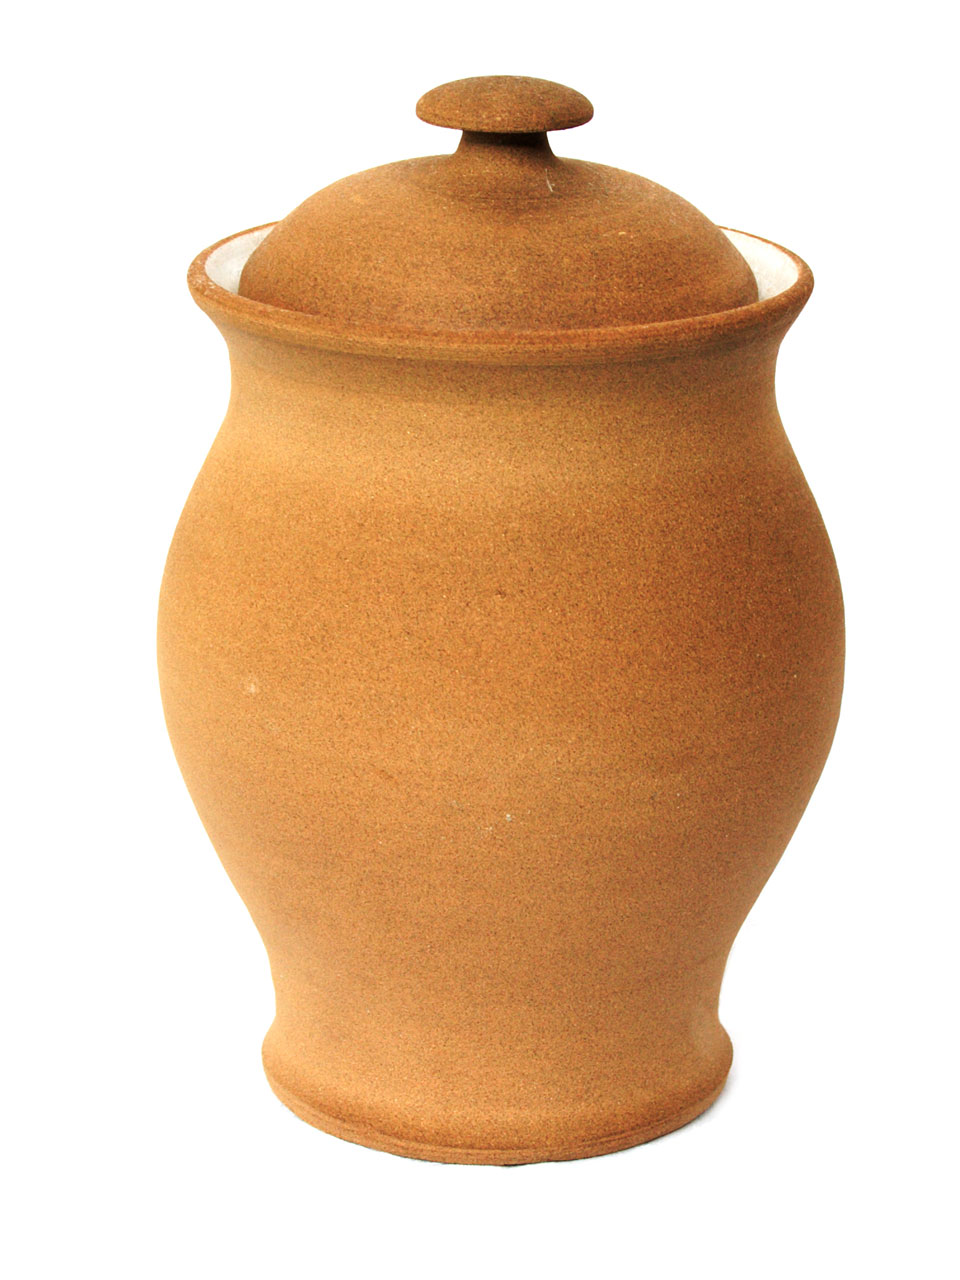 ceramic clay container free photo